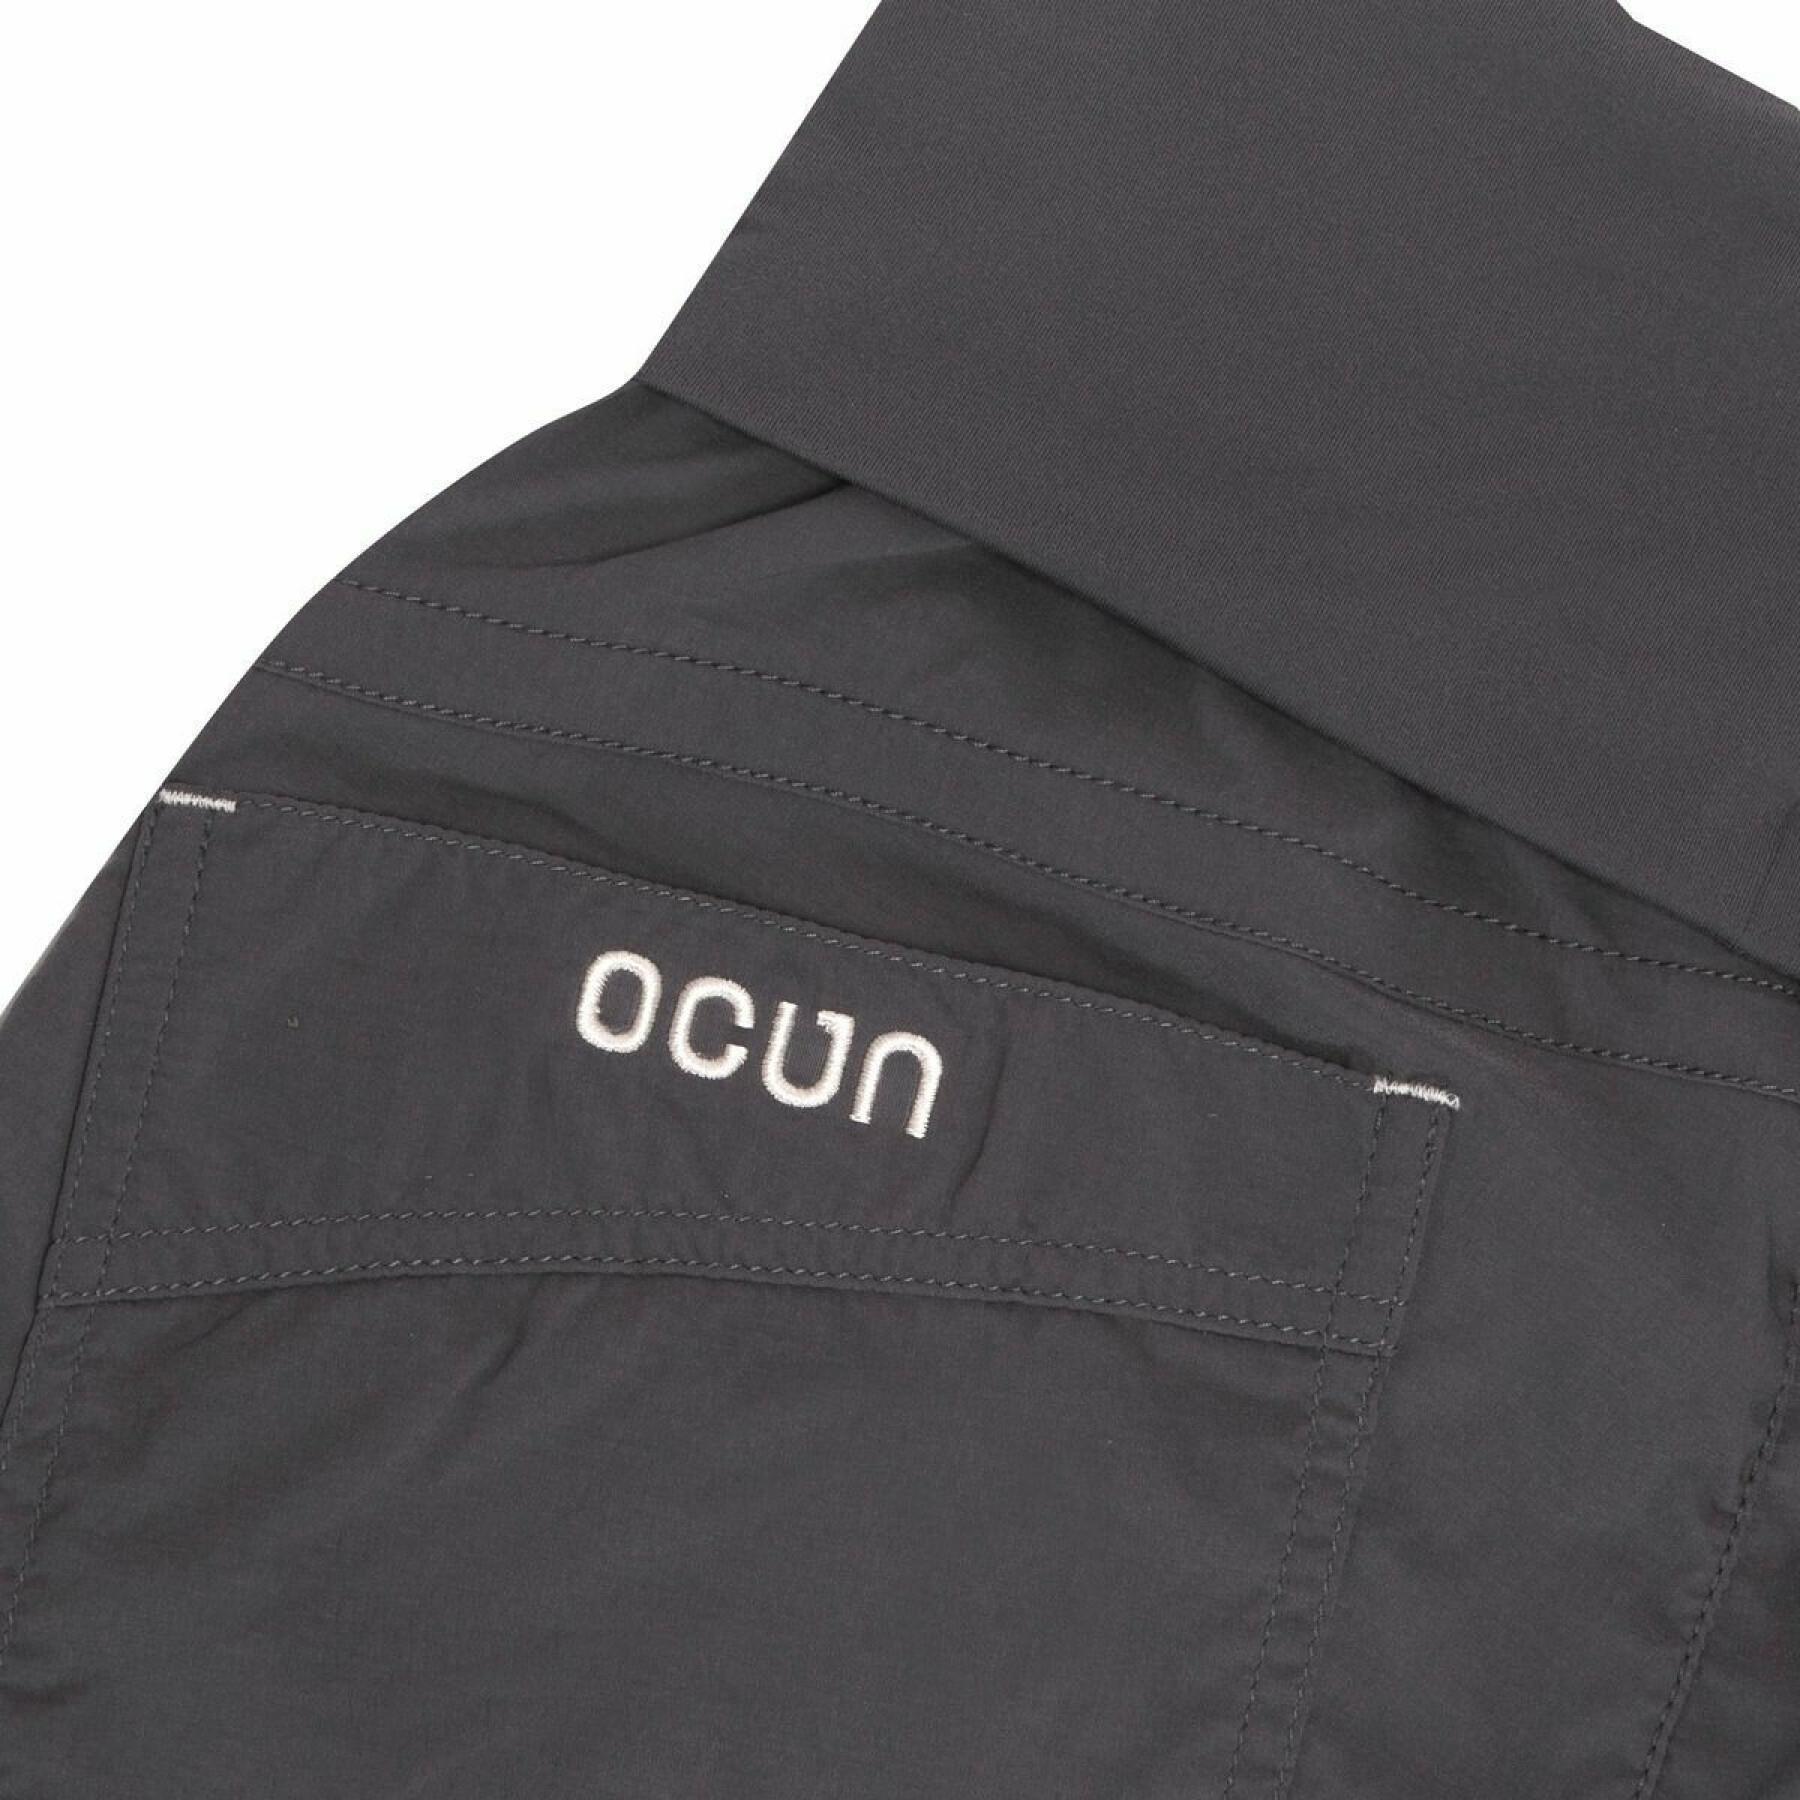 Climbing shorts for women Ocun Noya